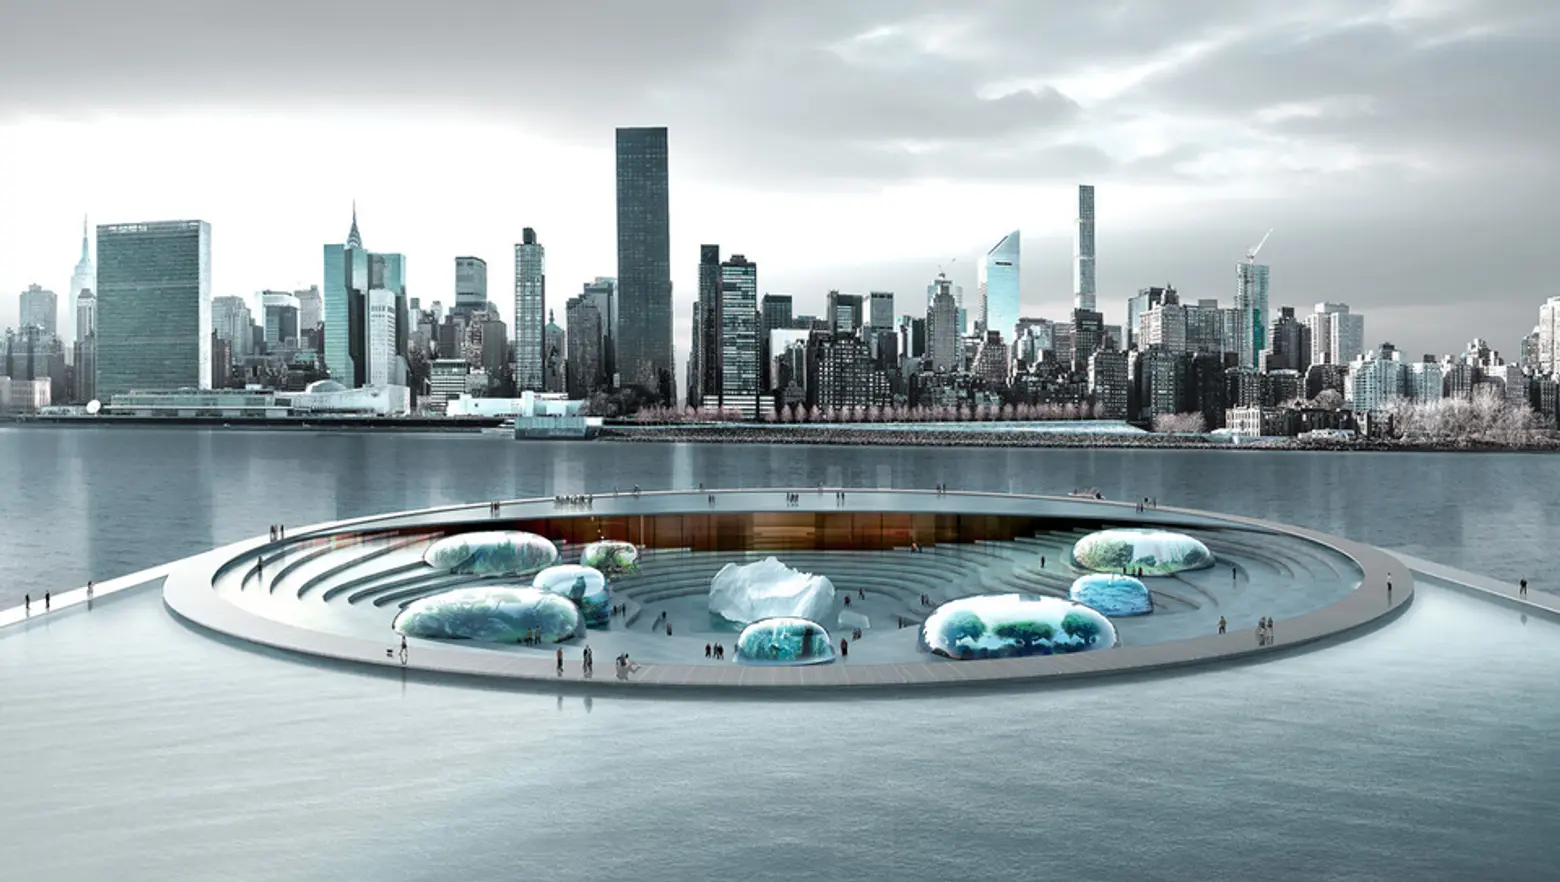 Lissoni Architettura Conceptualizes a Submerged Aquarium in the East River